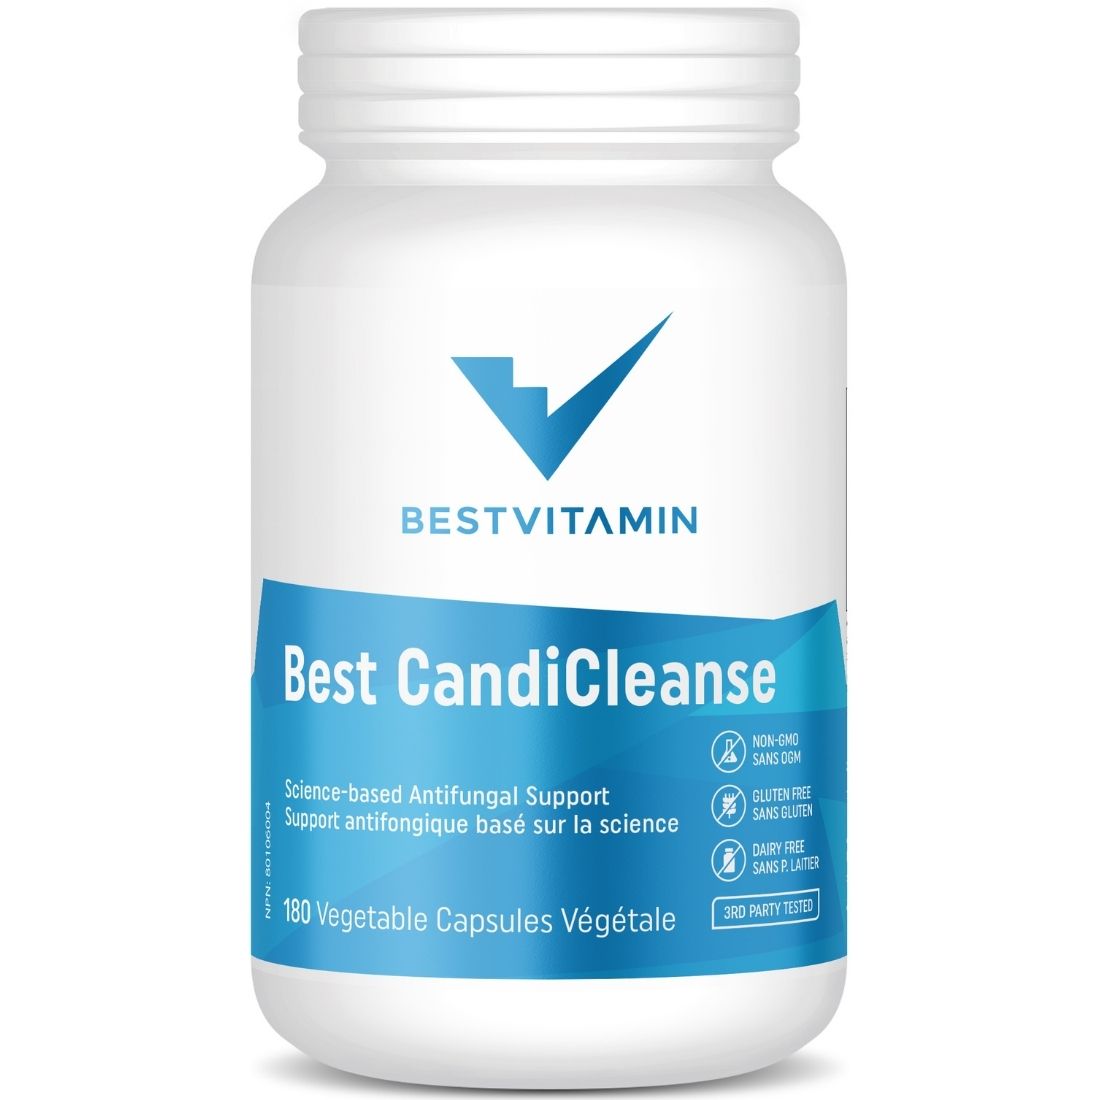 BestVitamin Best CandiCleanse, Antifungal, Eliminates candida & helps prevent future outbreaks, 180 Vegetable Capsules